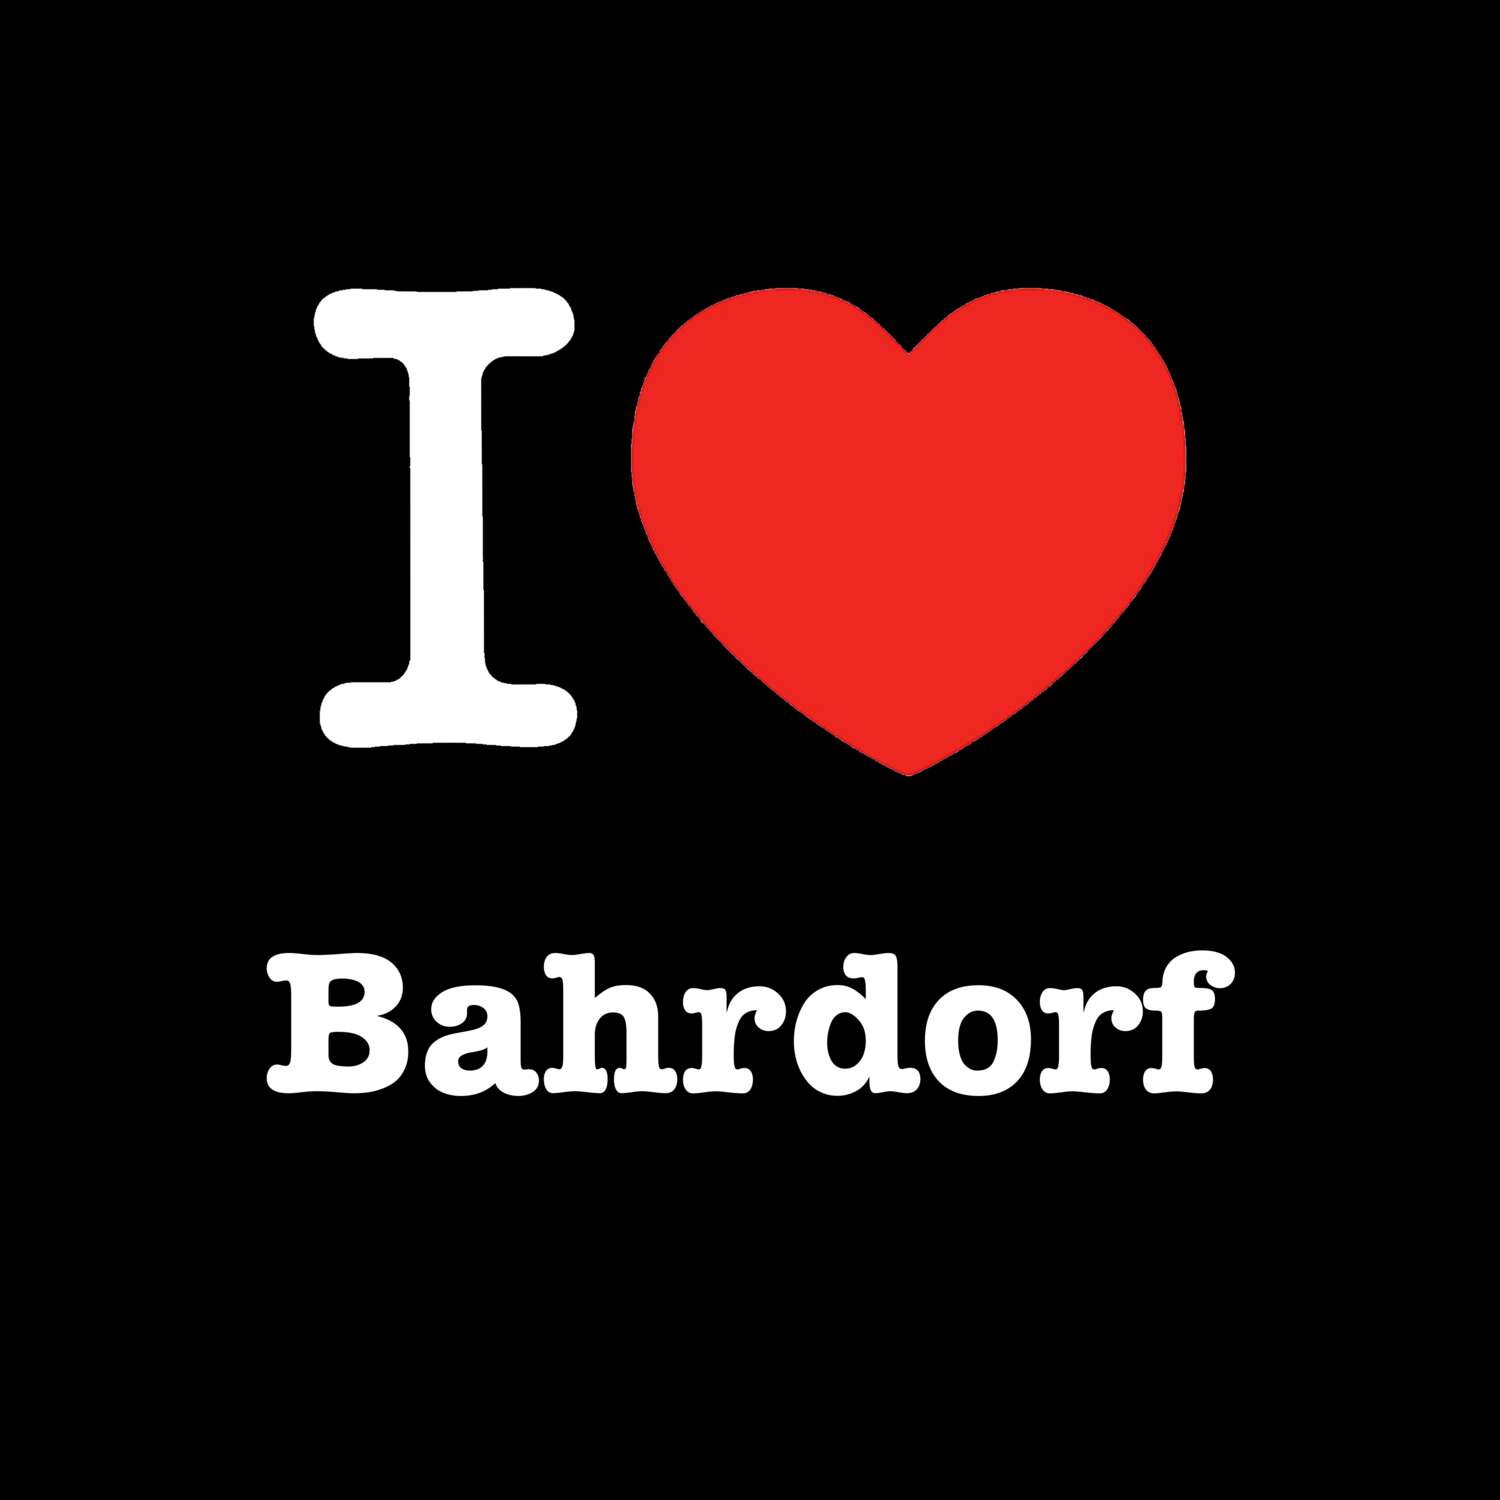 Bahrdorf T-Shirt »I love«